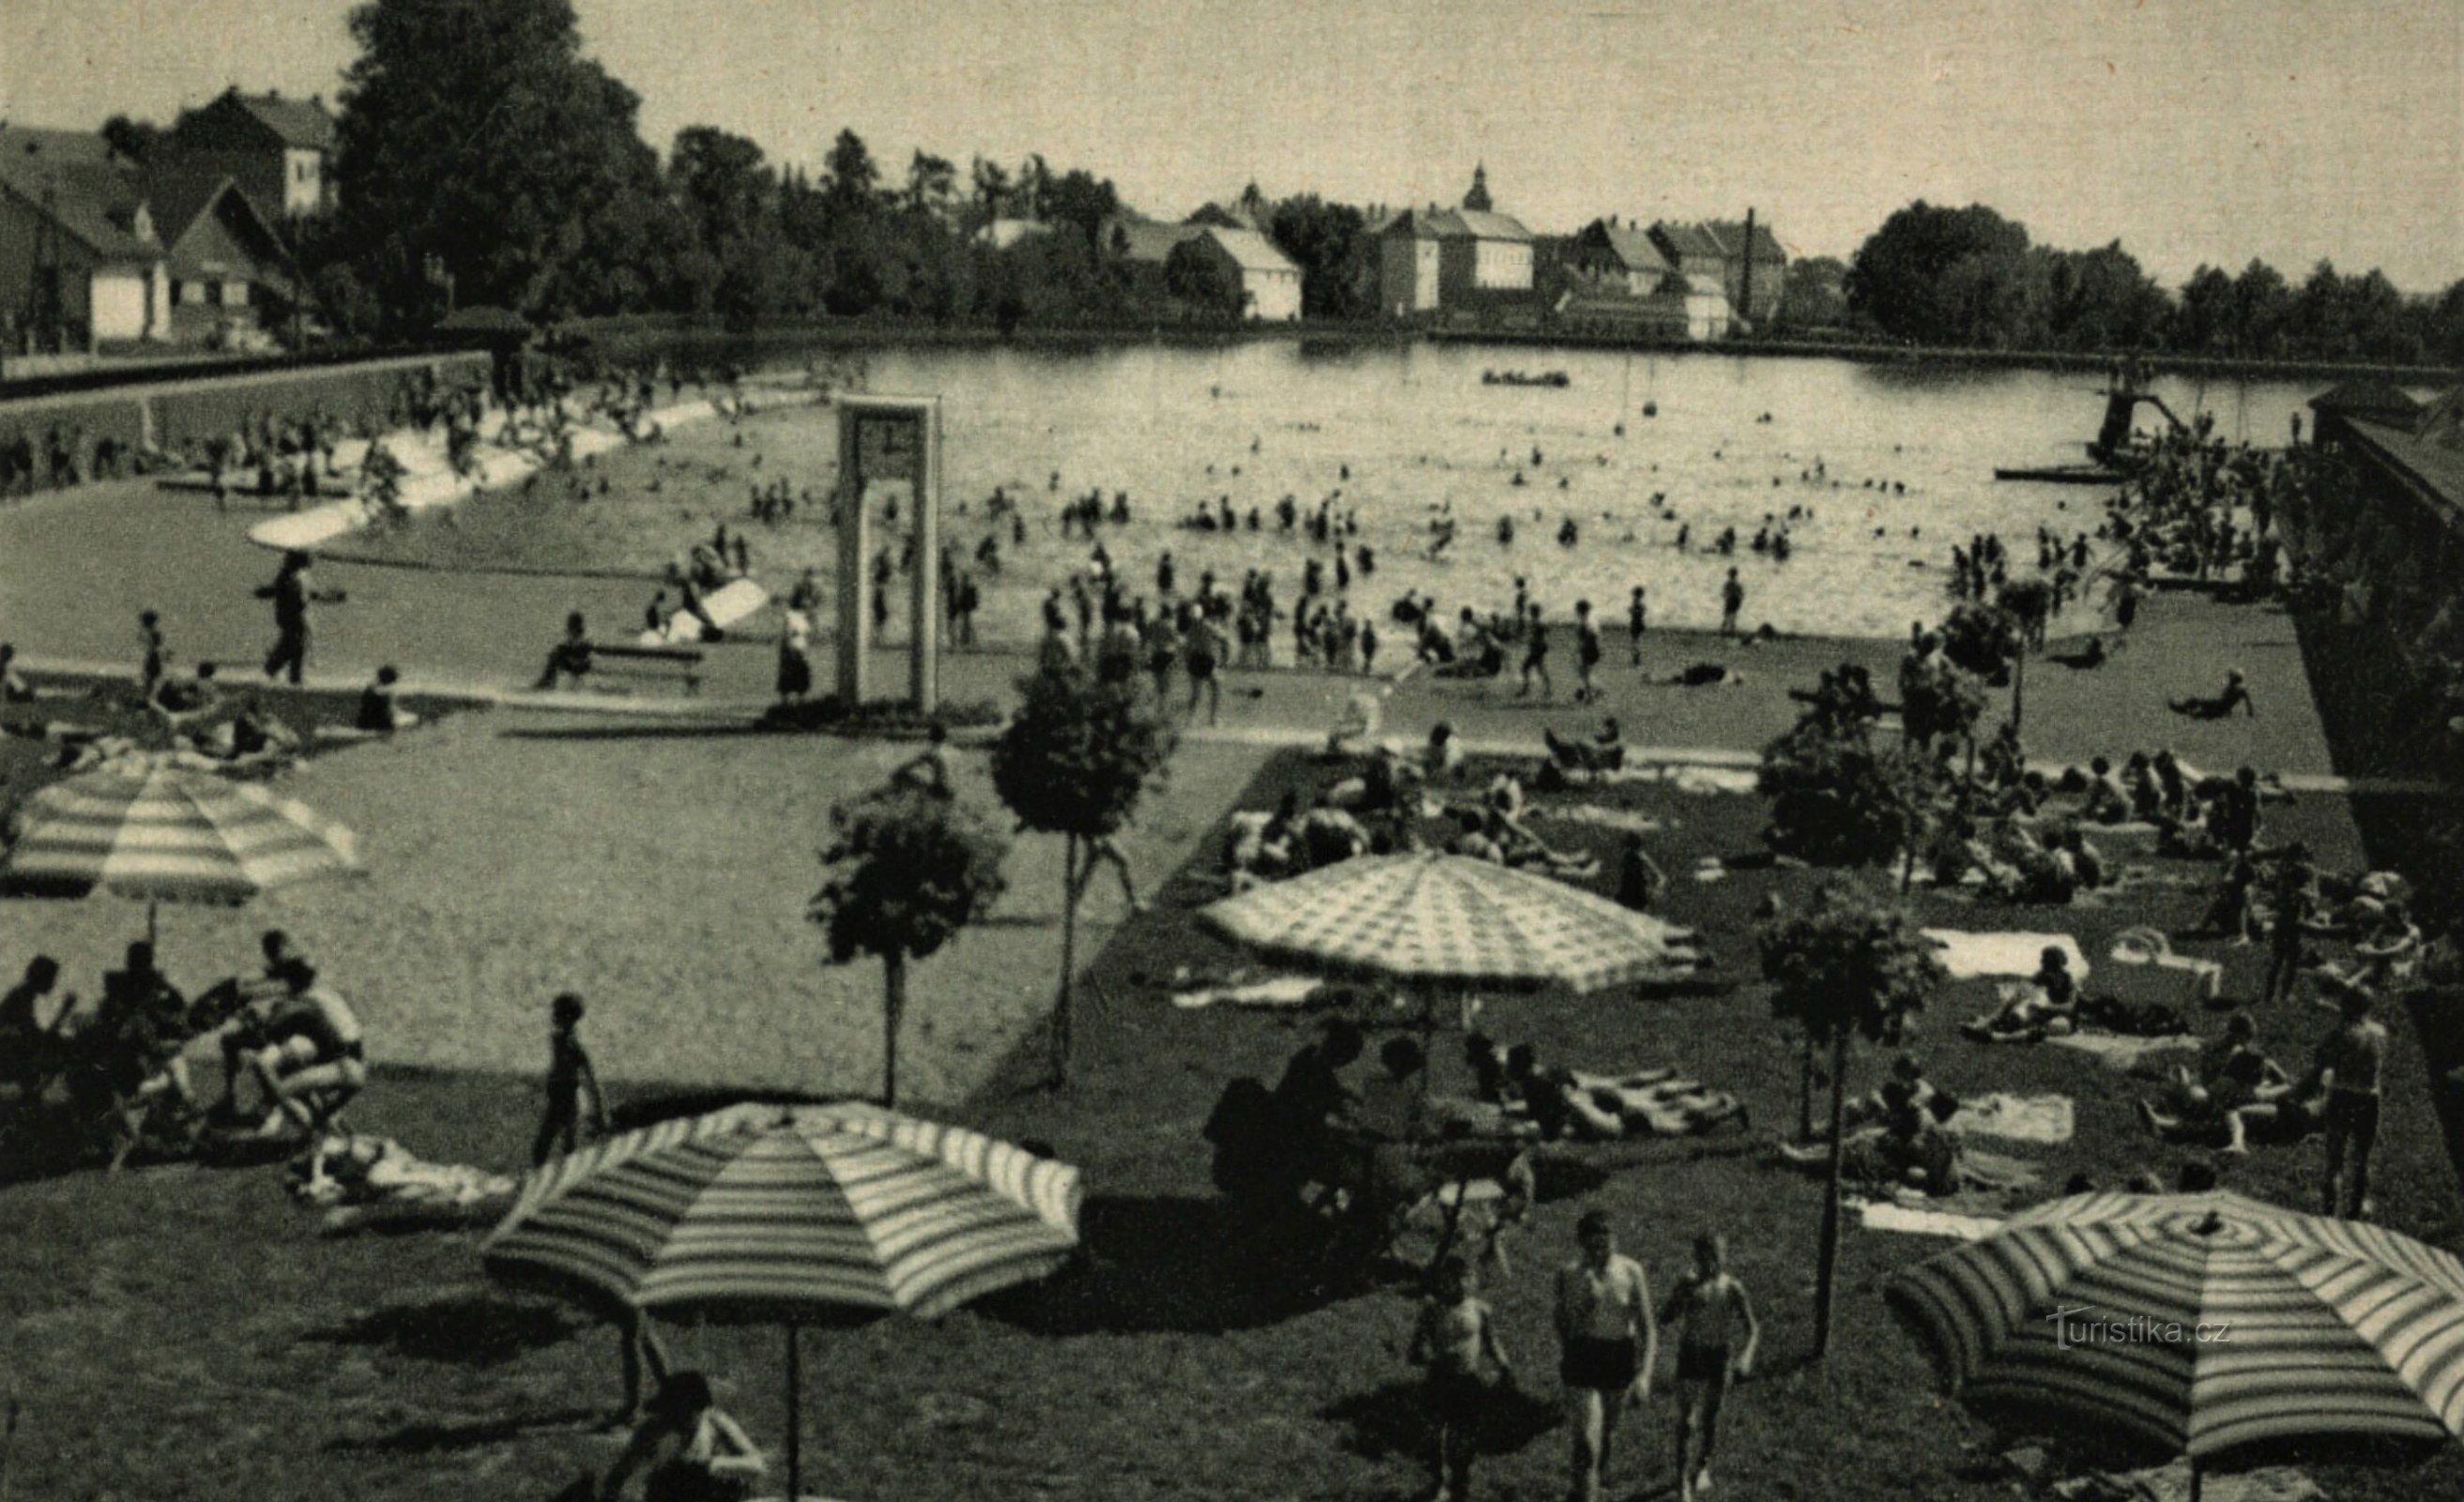 Het zwembad bij de Knížete-vijver in Jičín vóór 1935